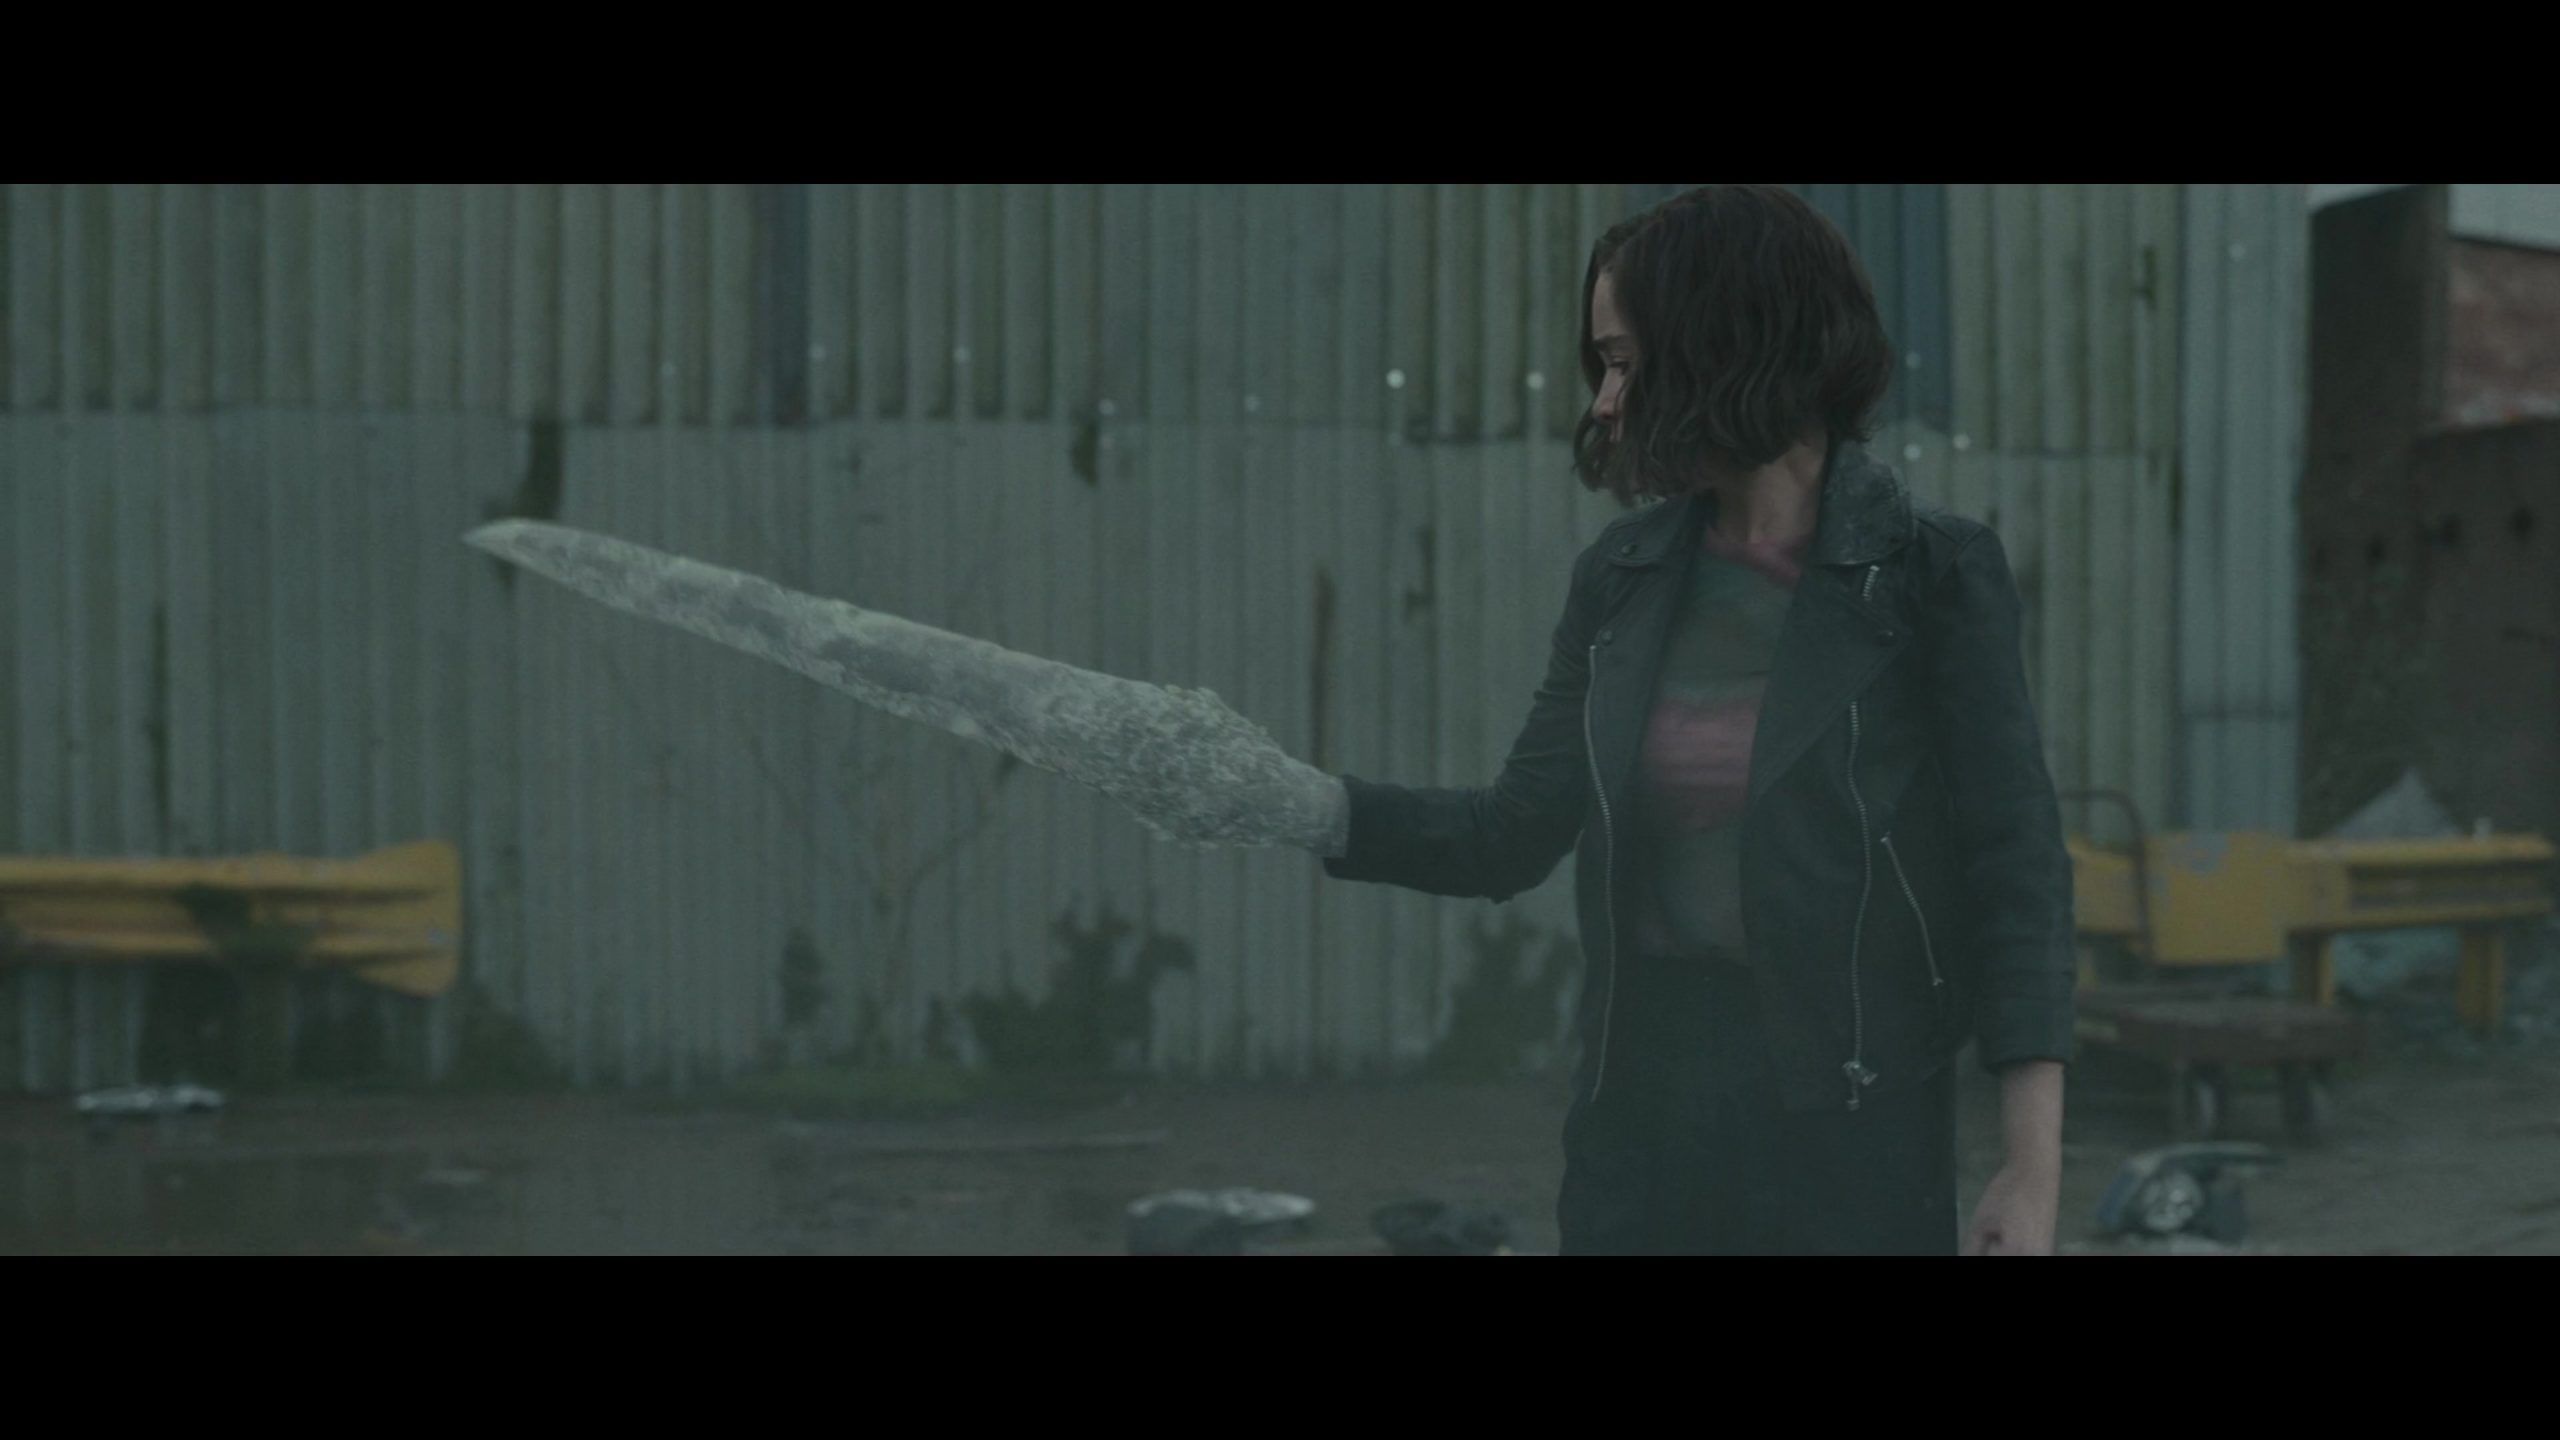 Worn on Secret Invasion TV Show - Black Leather Biker Jacket of Emilia Clarke as G'iah